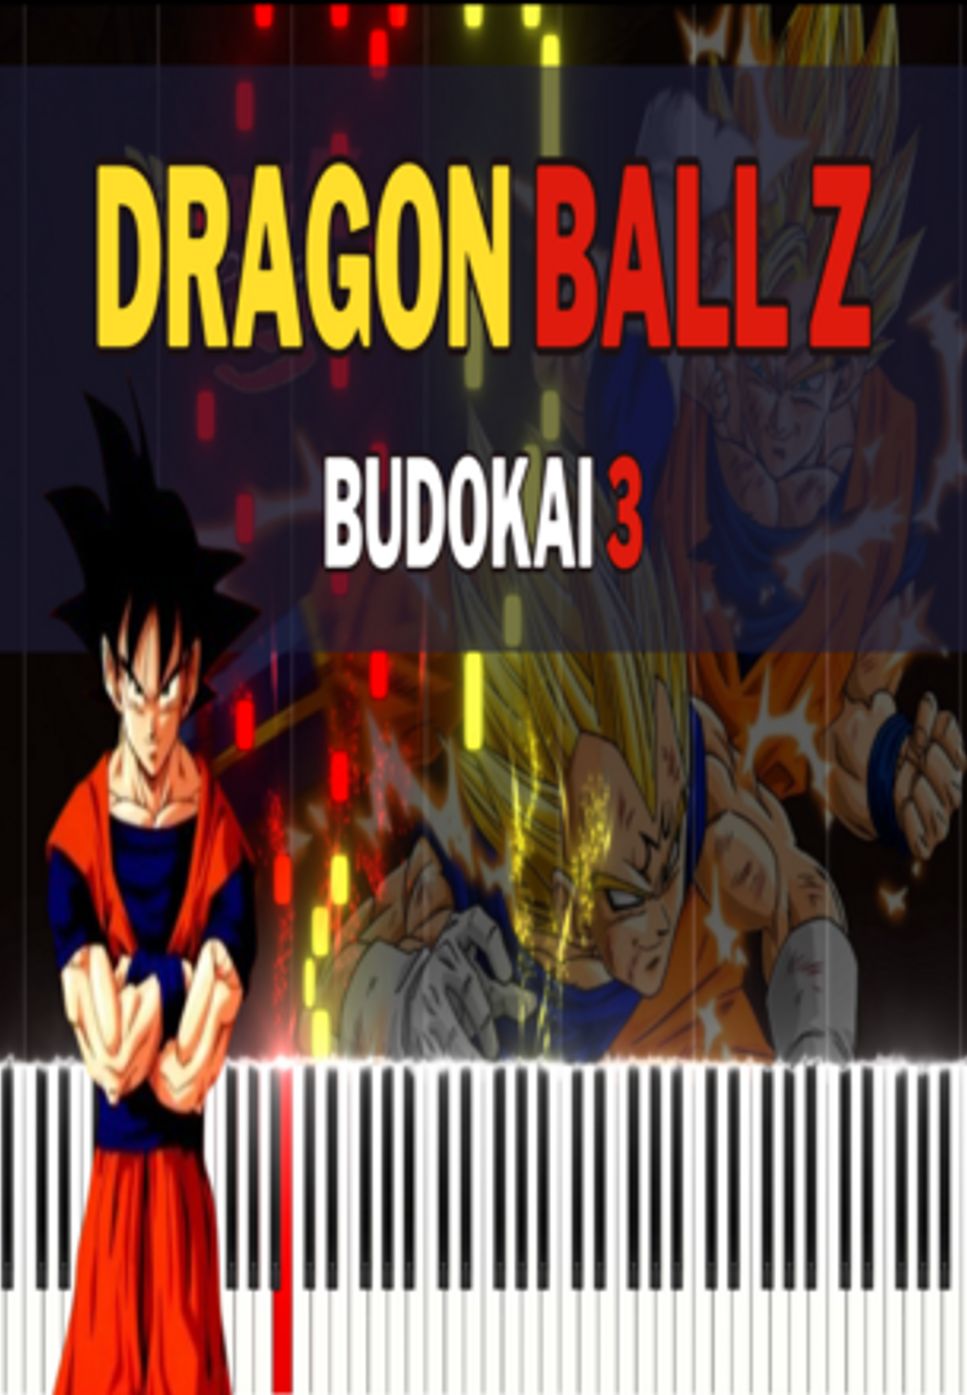 Kenji Yamamoto - DragonBall Z Budokai 3 - Opening by Vincent Payet